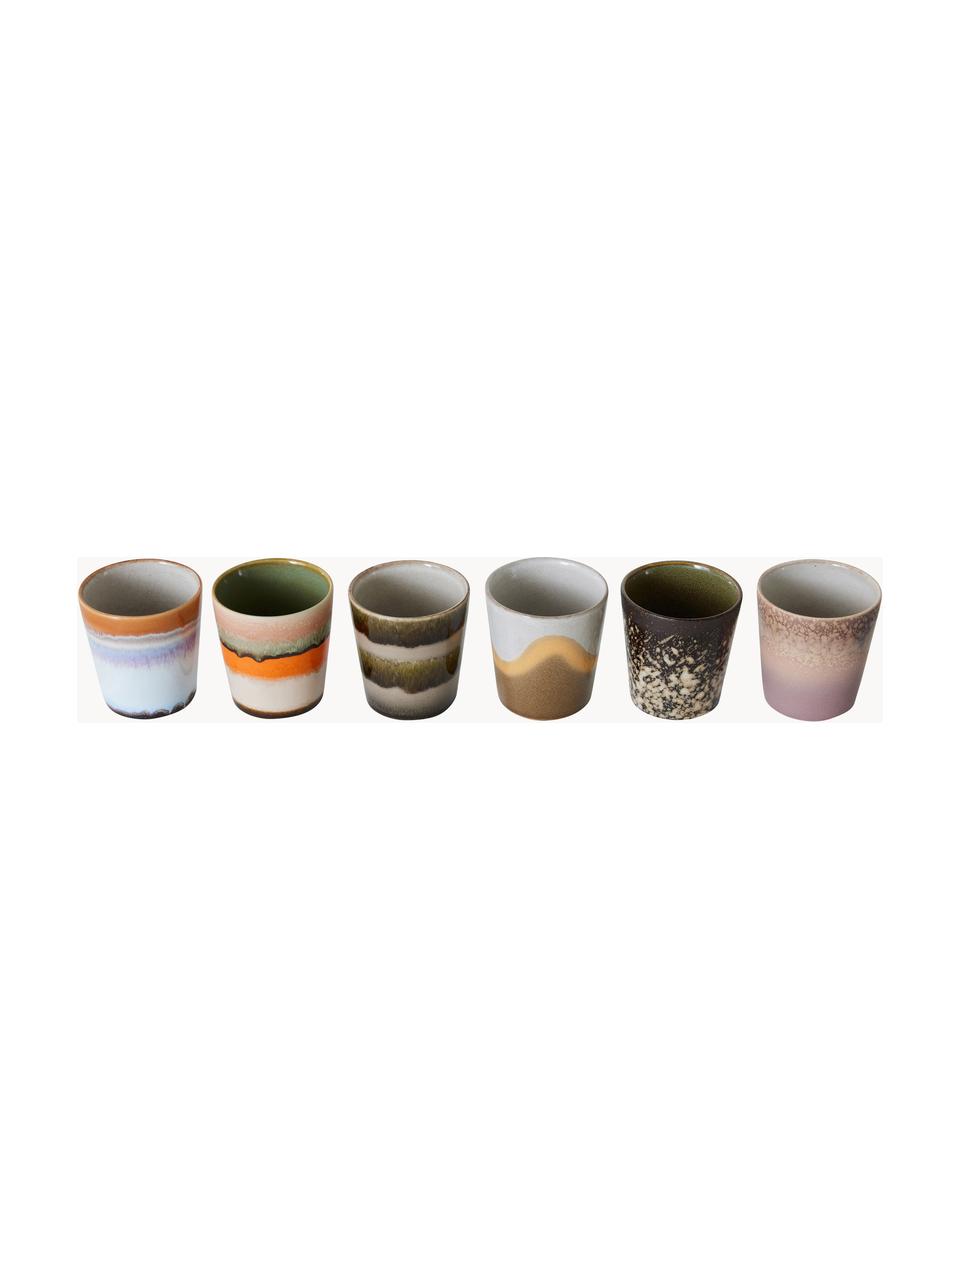 Handbemalte Keramik-Becher 70's mit reaktiver Glasur, 6er-Set, Keramik, Design 2, Ø 8 x H 8 cm, 180 ml